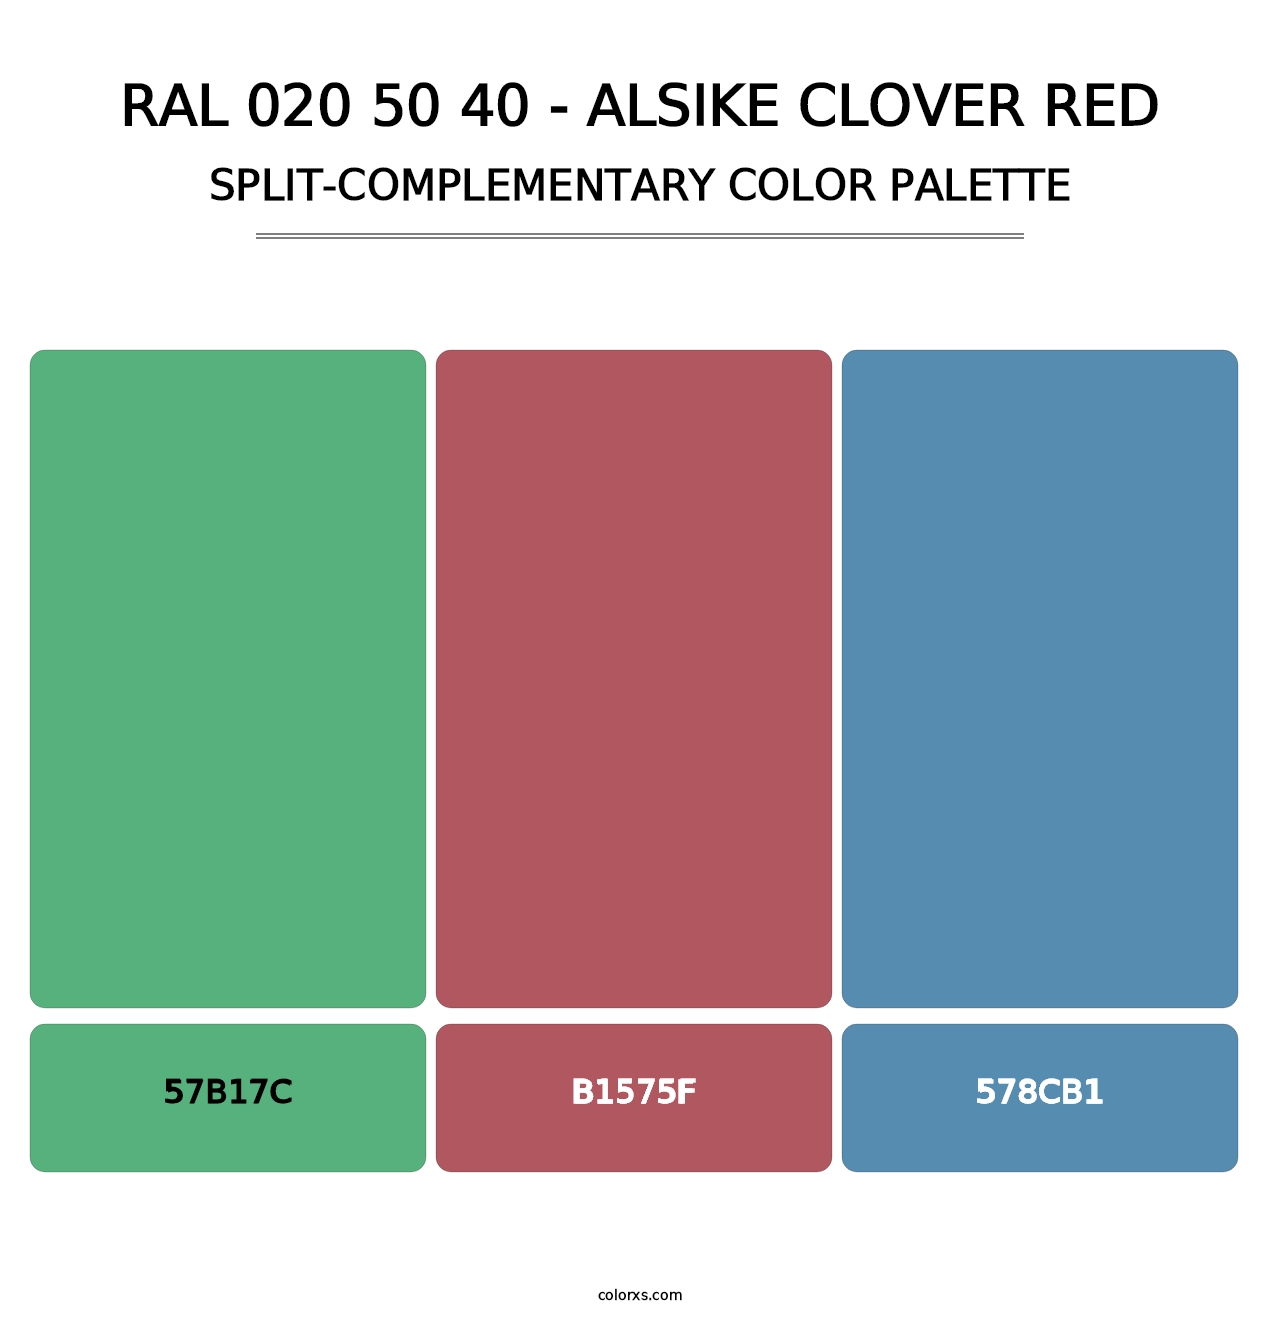 RAL 020 50 40 - Alsike Clover Red - Split-Complementary Color Palette